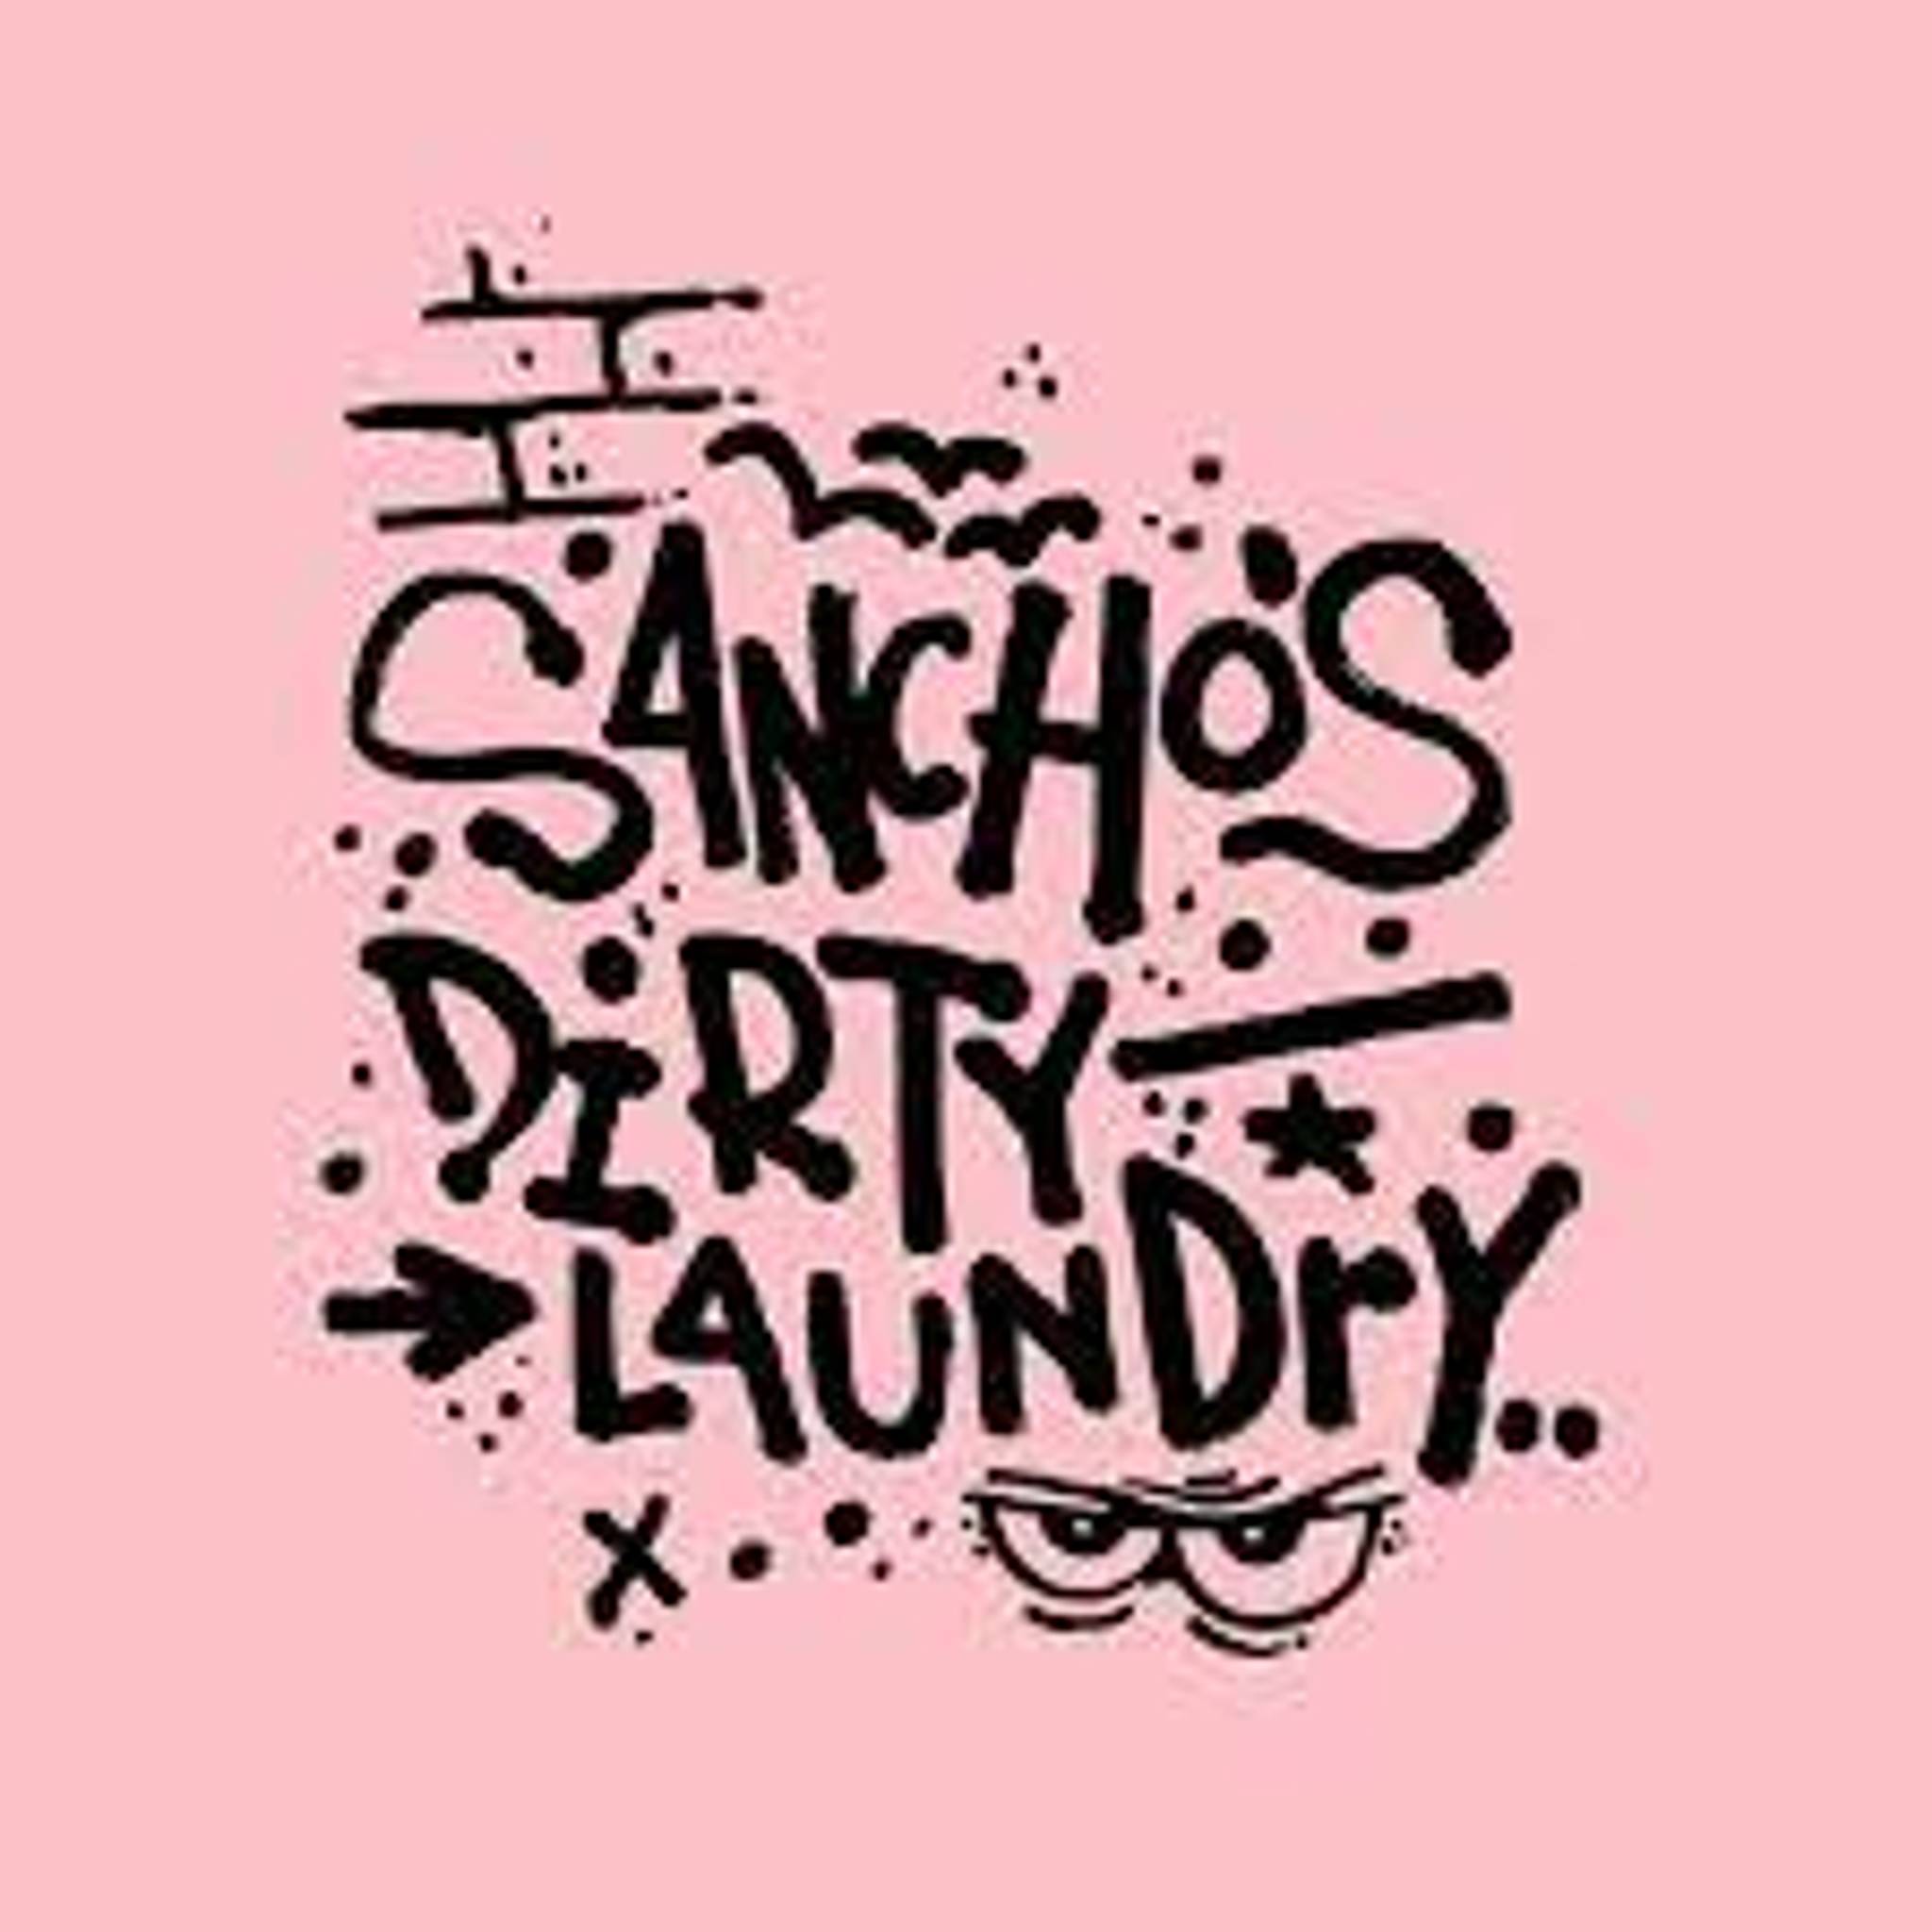 &mdash;Sancho's Dirty Laundry